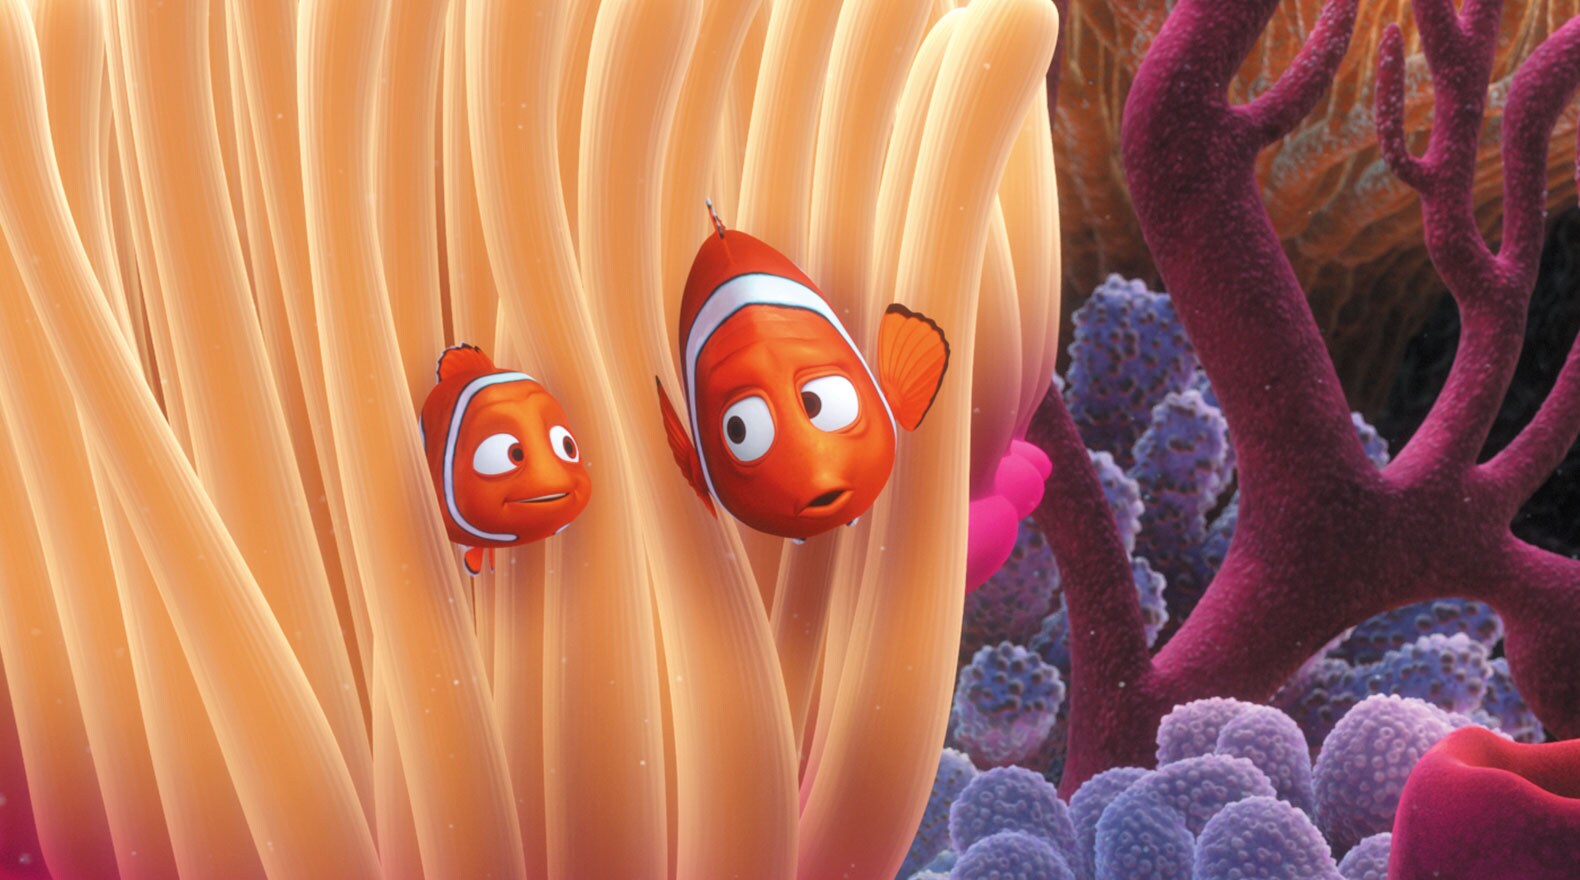 Finding Nemo instal